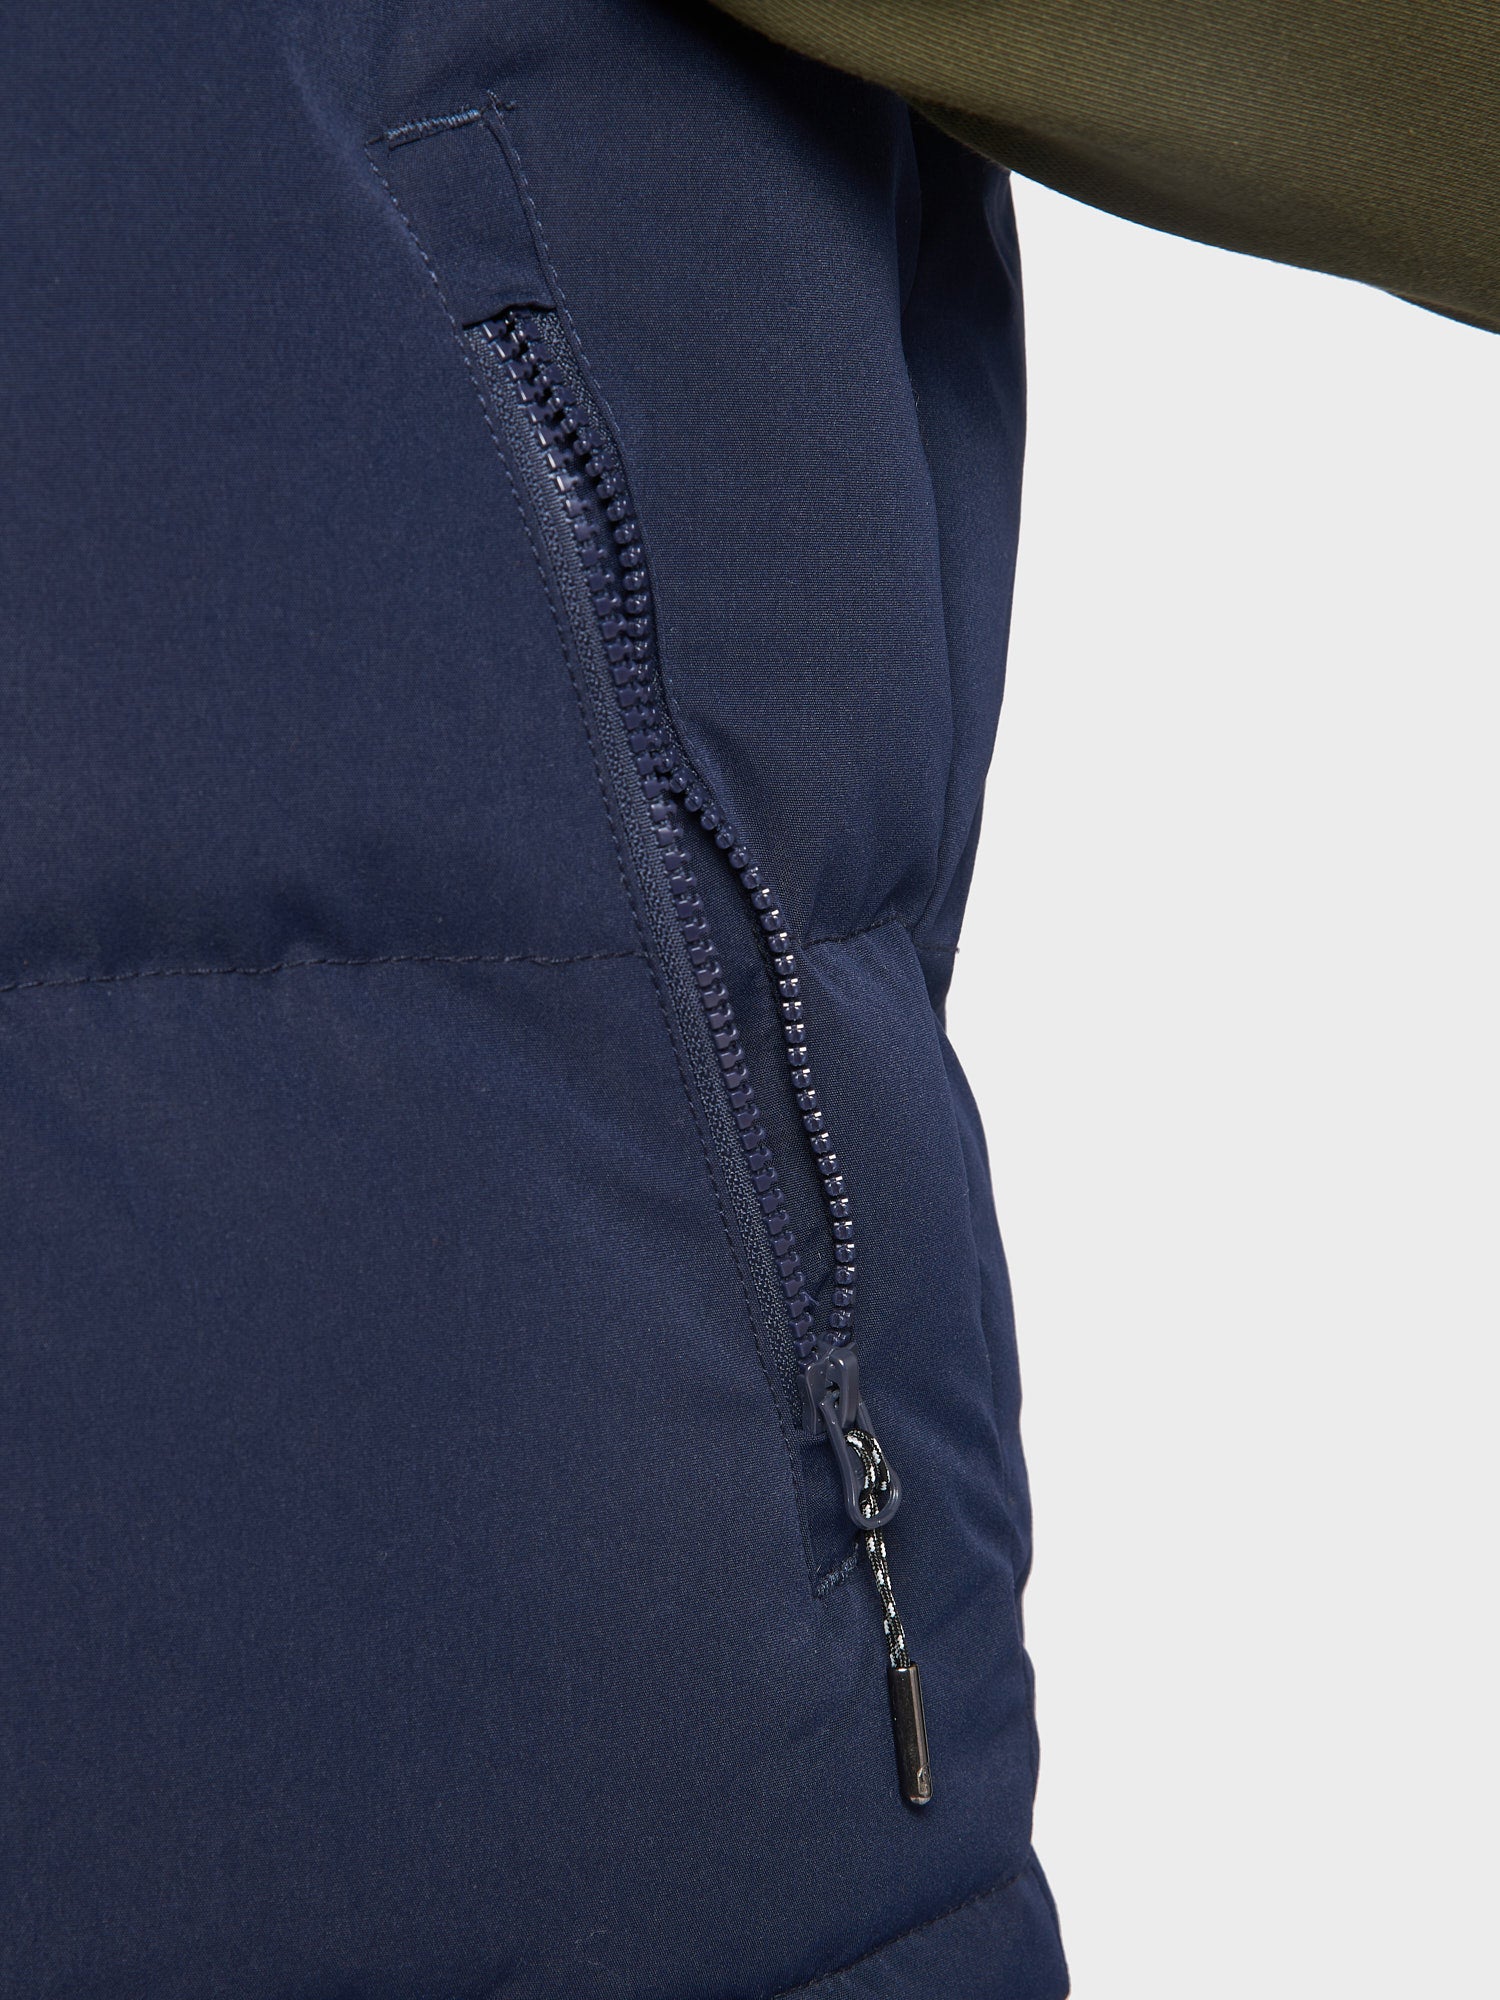 P Bear Cut + Sew Funnel Neck Puffer Vest in Navy Blue